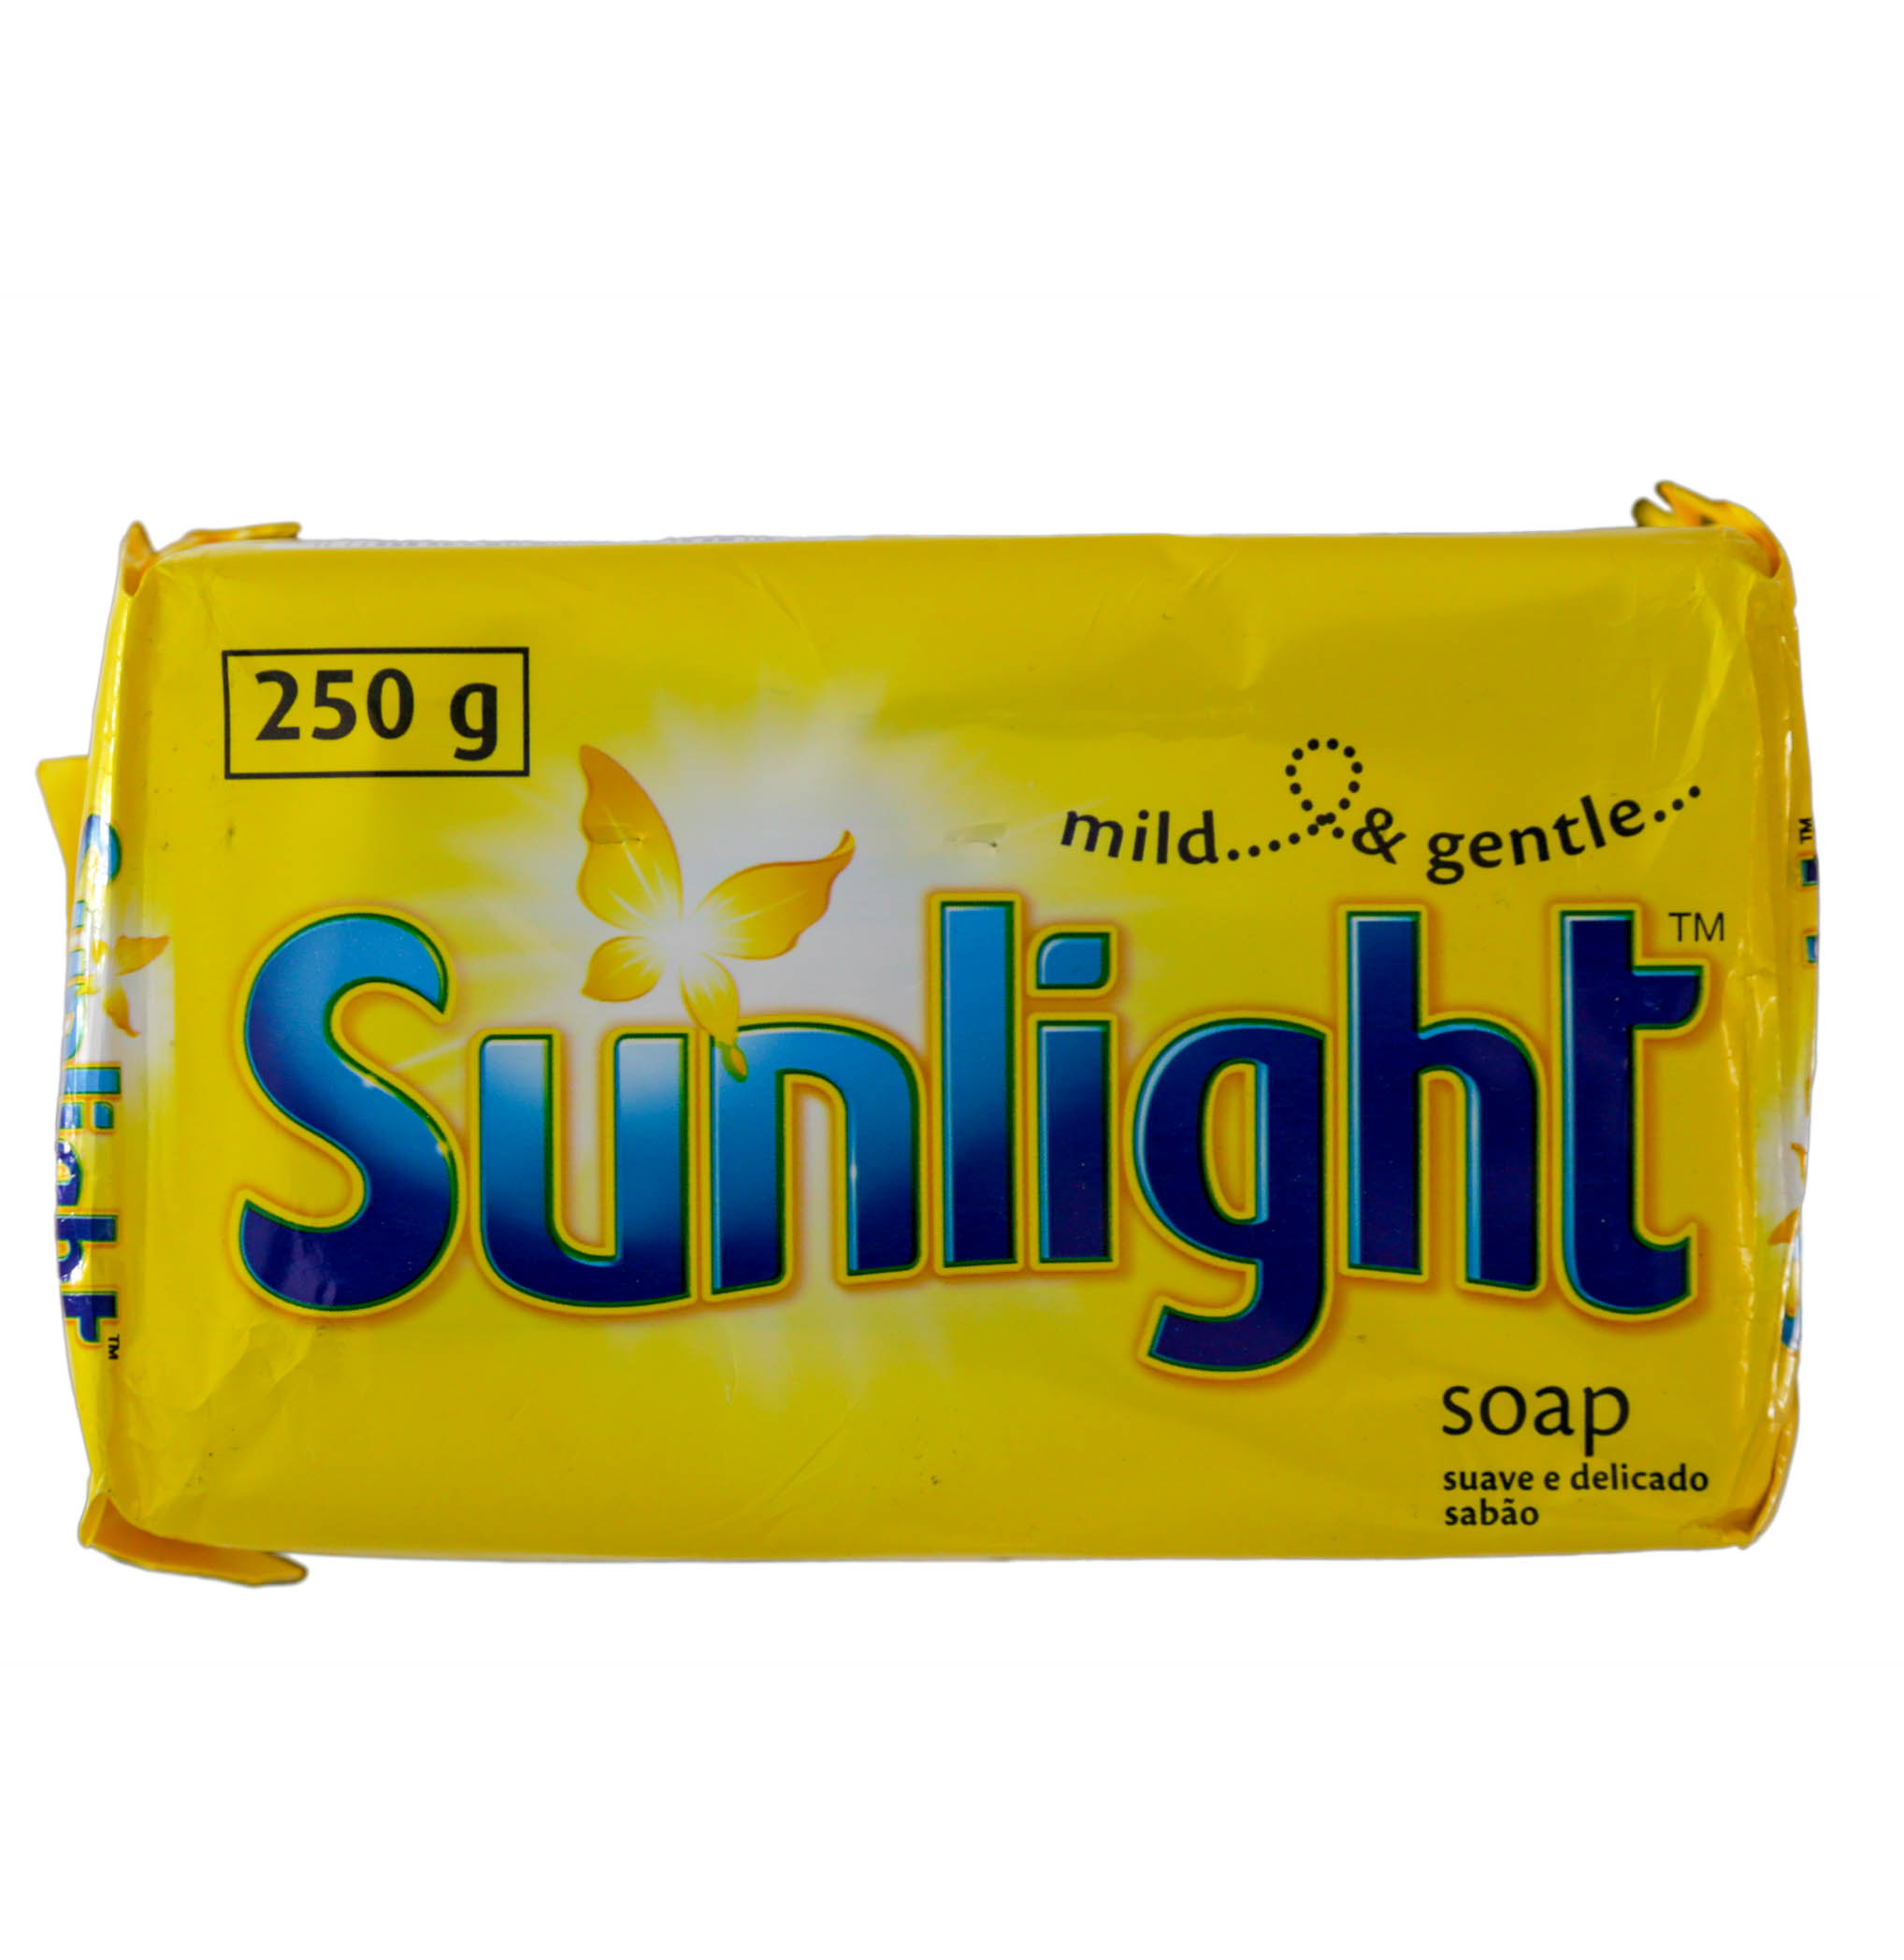 Sunlight Soap bar 250g